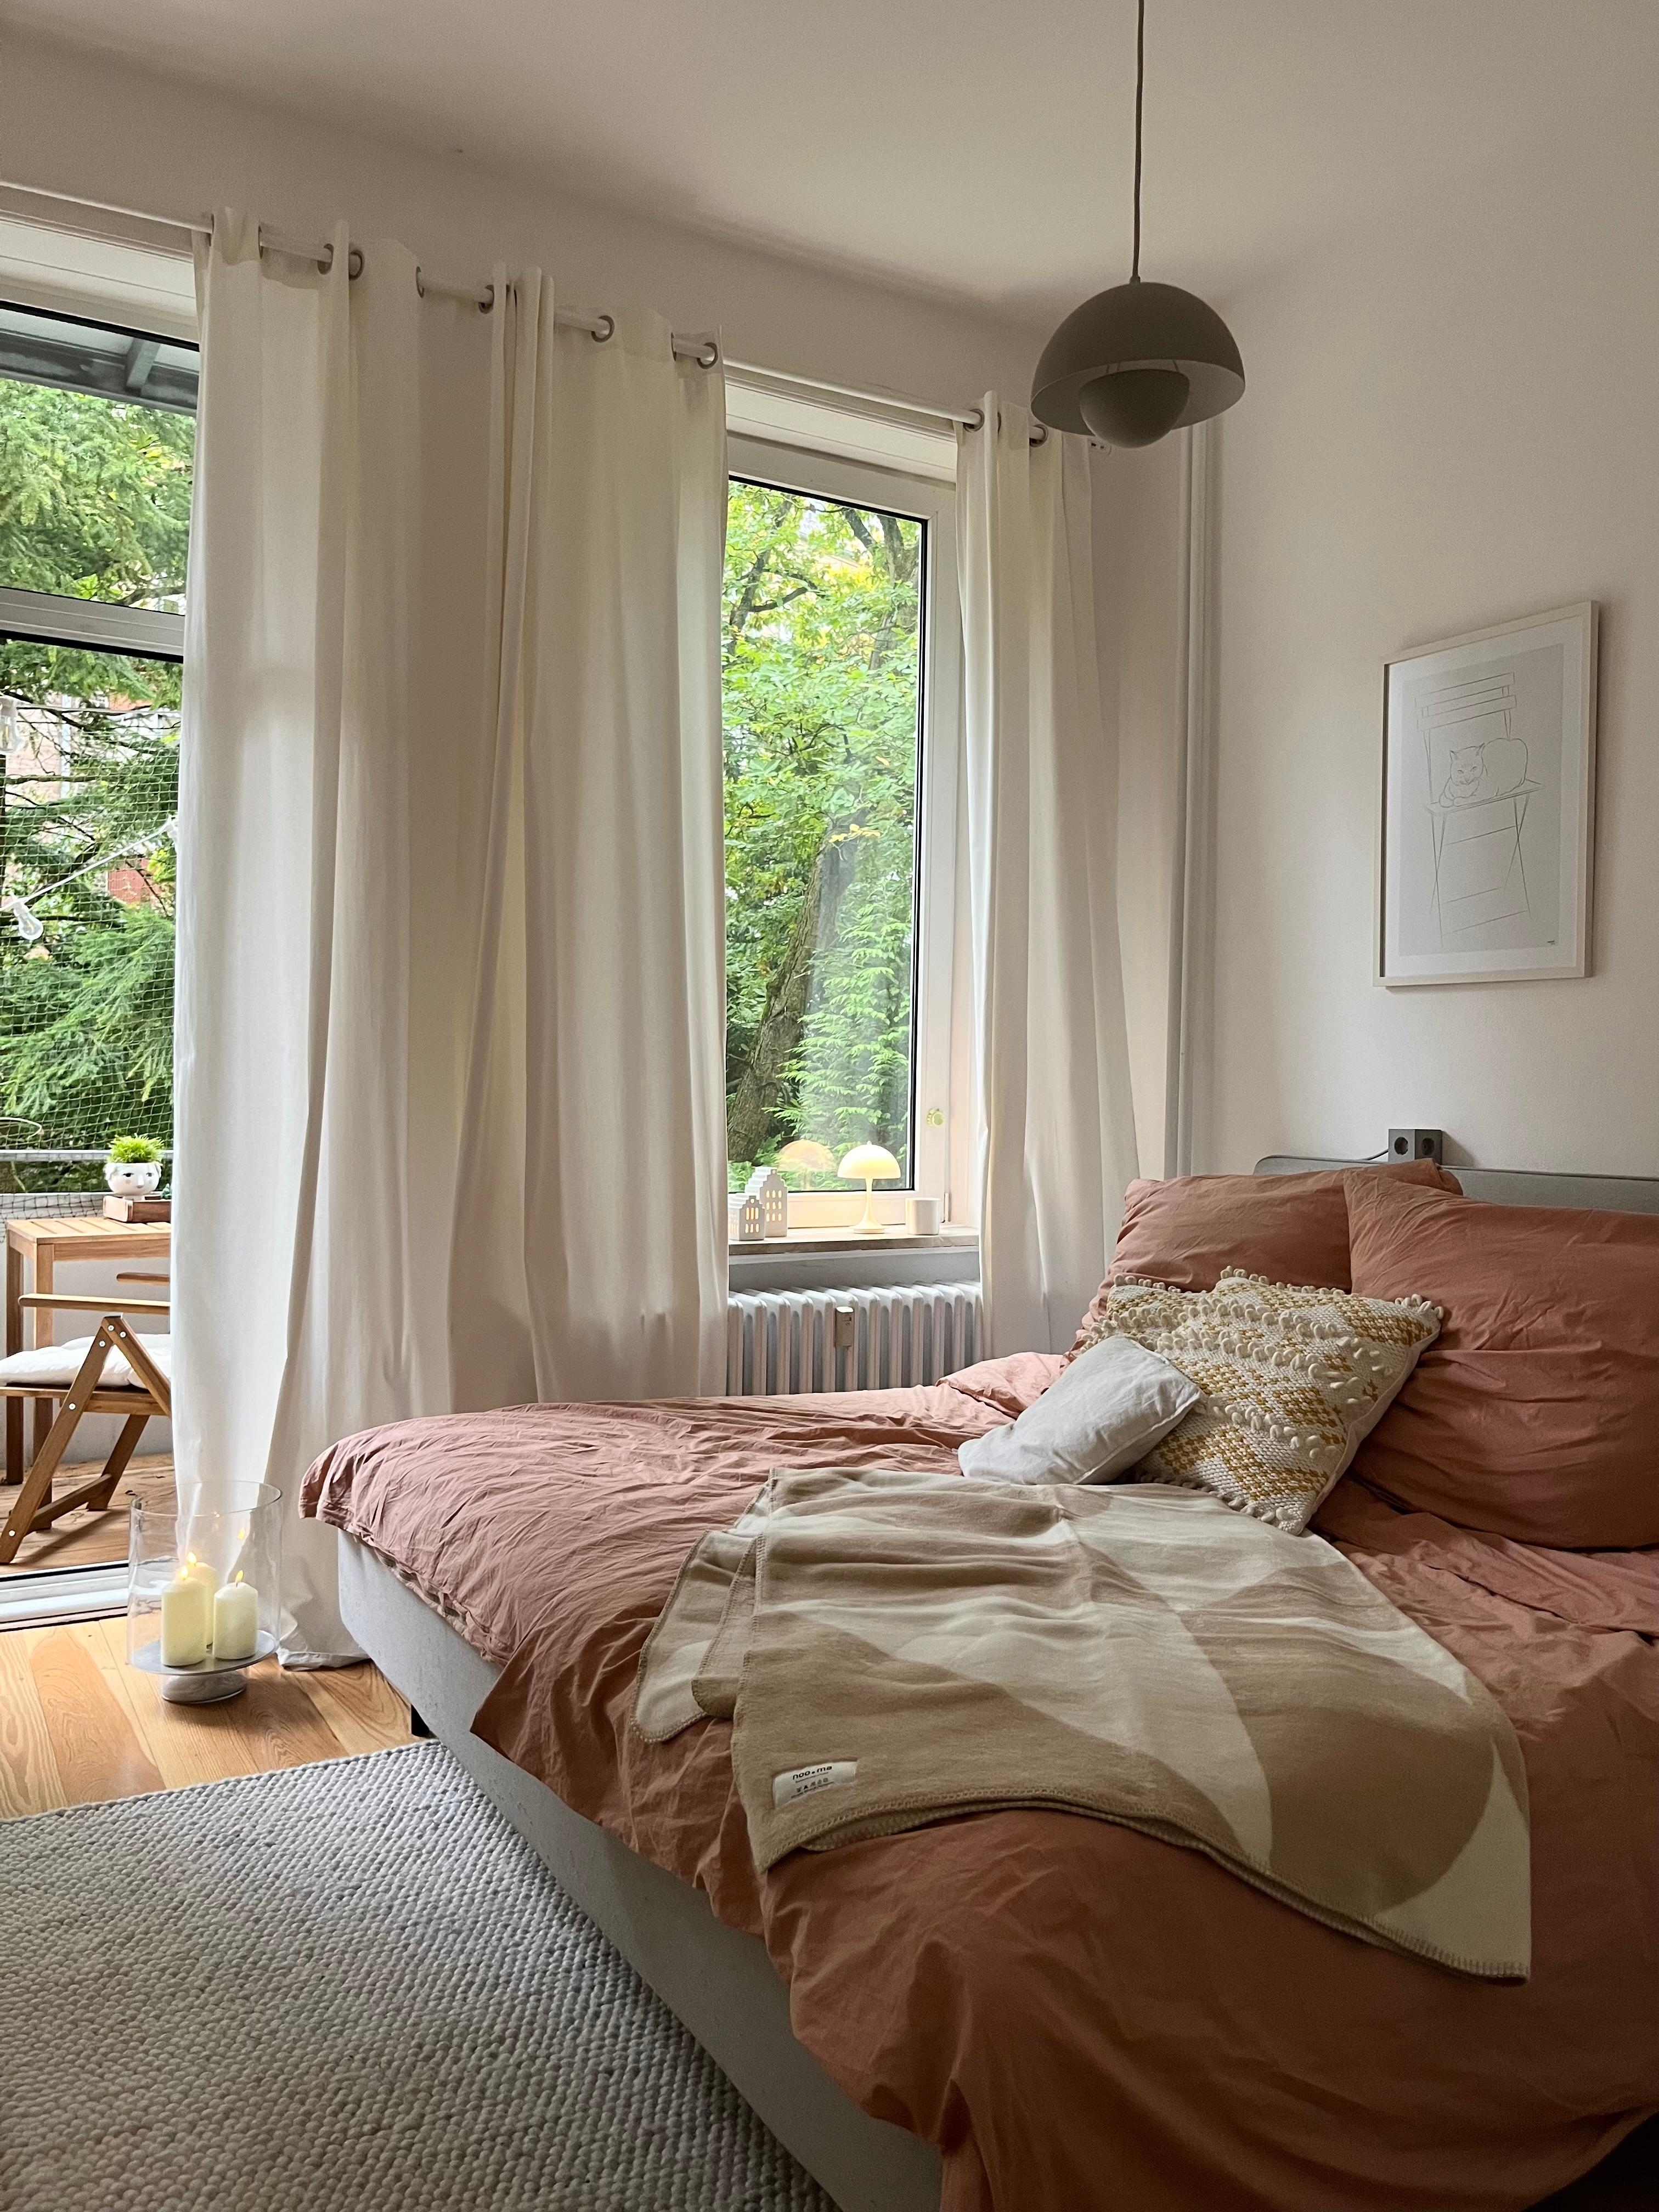 #cozybedroom #schlafzimmerinspo #altbauwohnung #hygge #skandinavischwohnen #dezenteherbstdeko